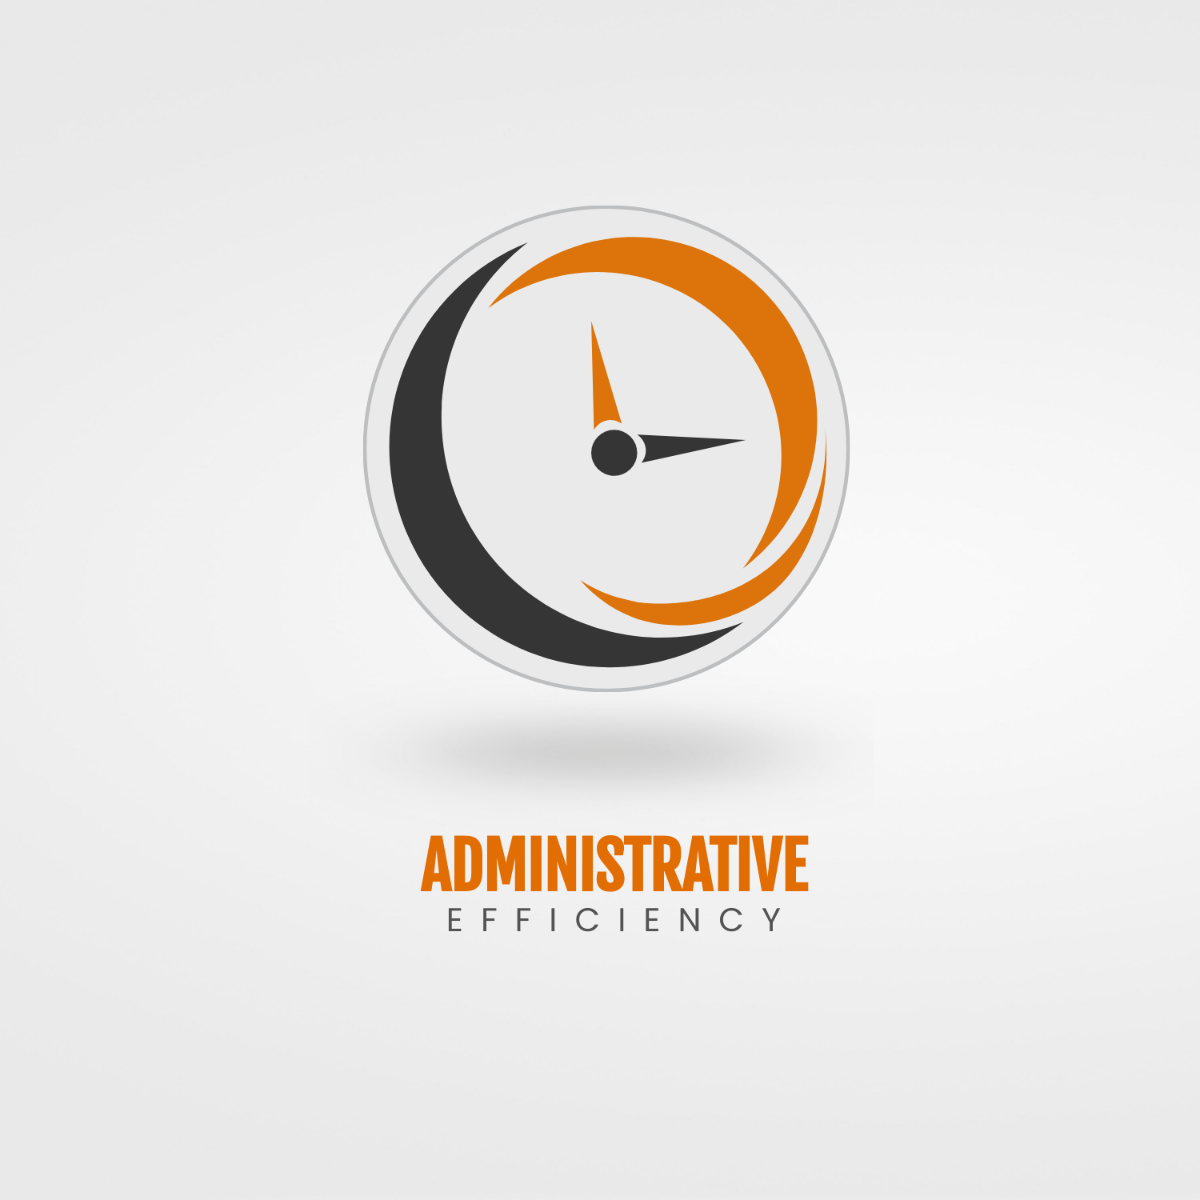 Administrative Efficiency Clock Logo